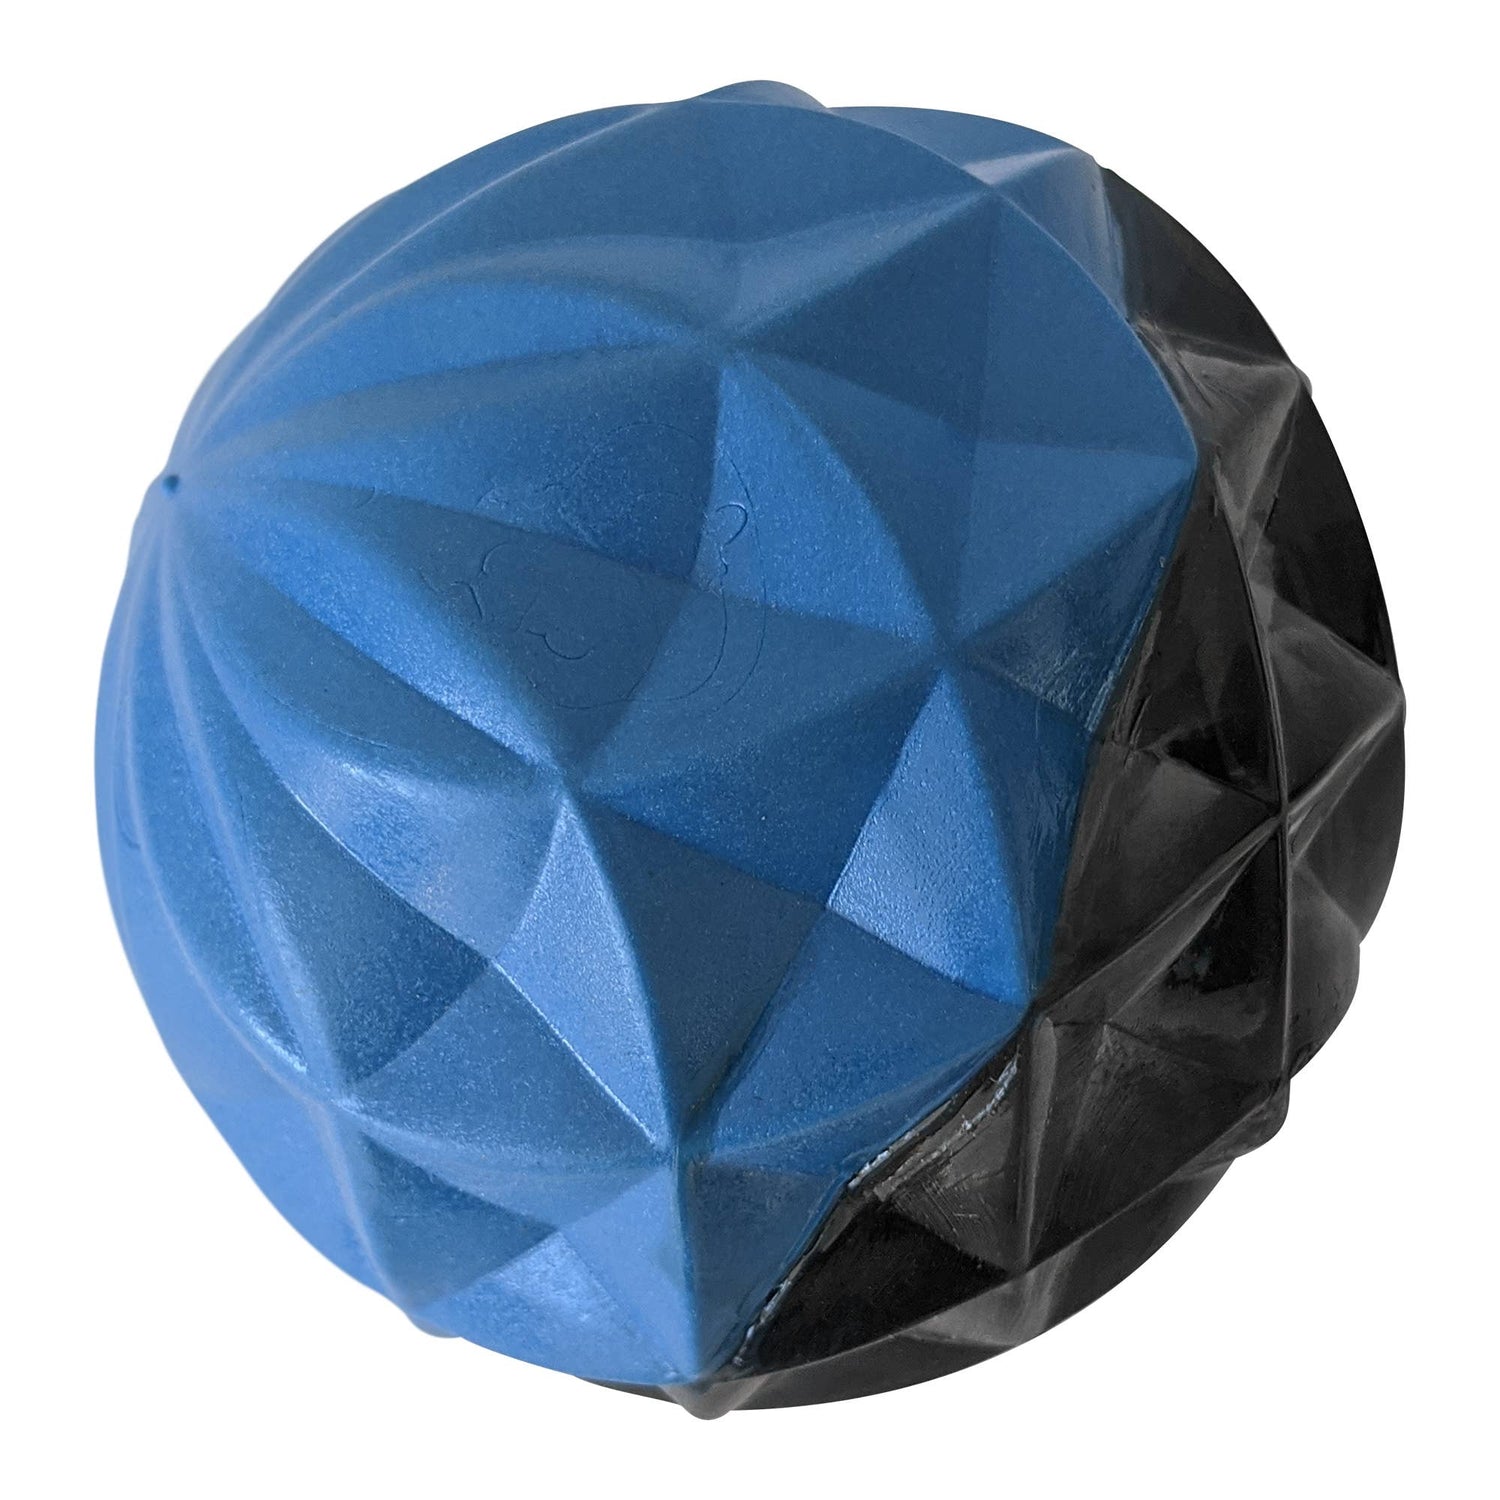 Geometric Design Textured Ball Dog Chew Toy - Large-0